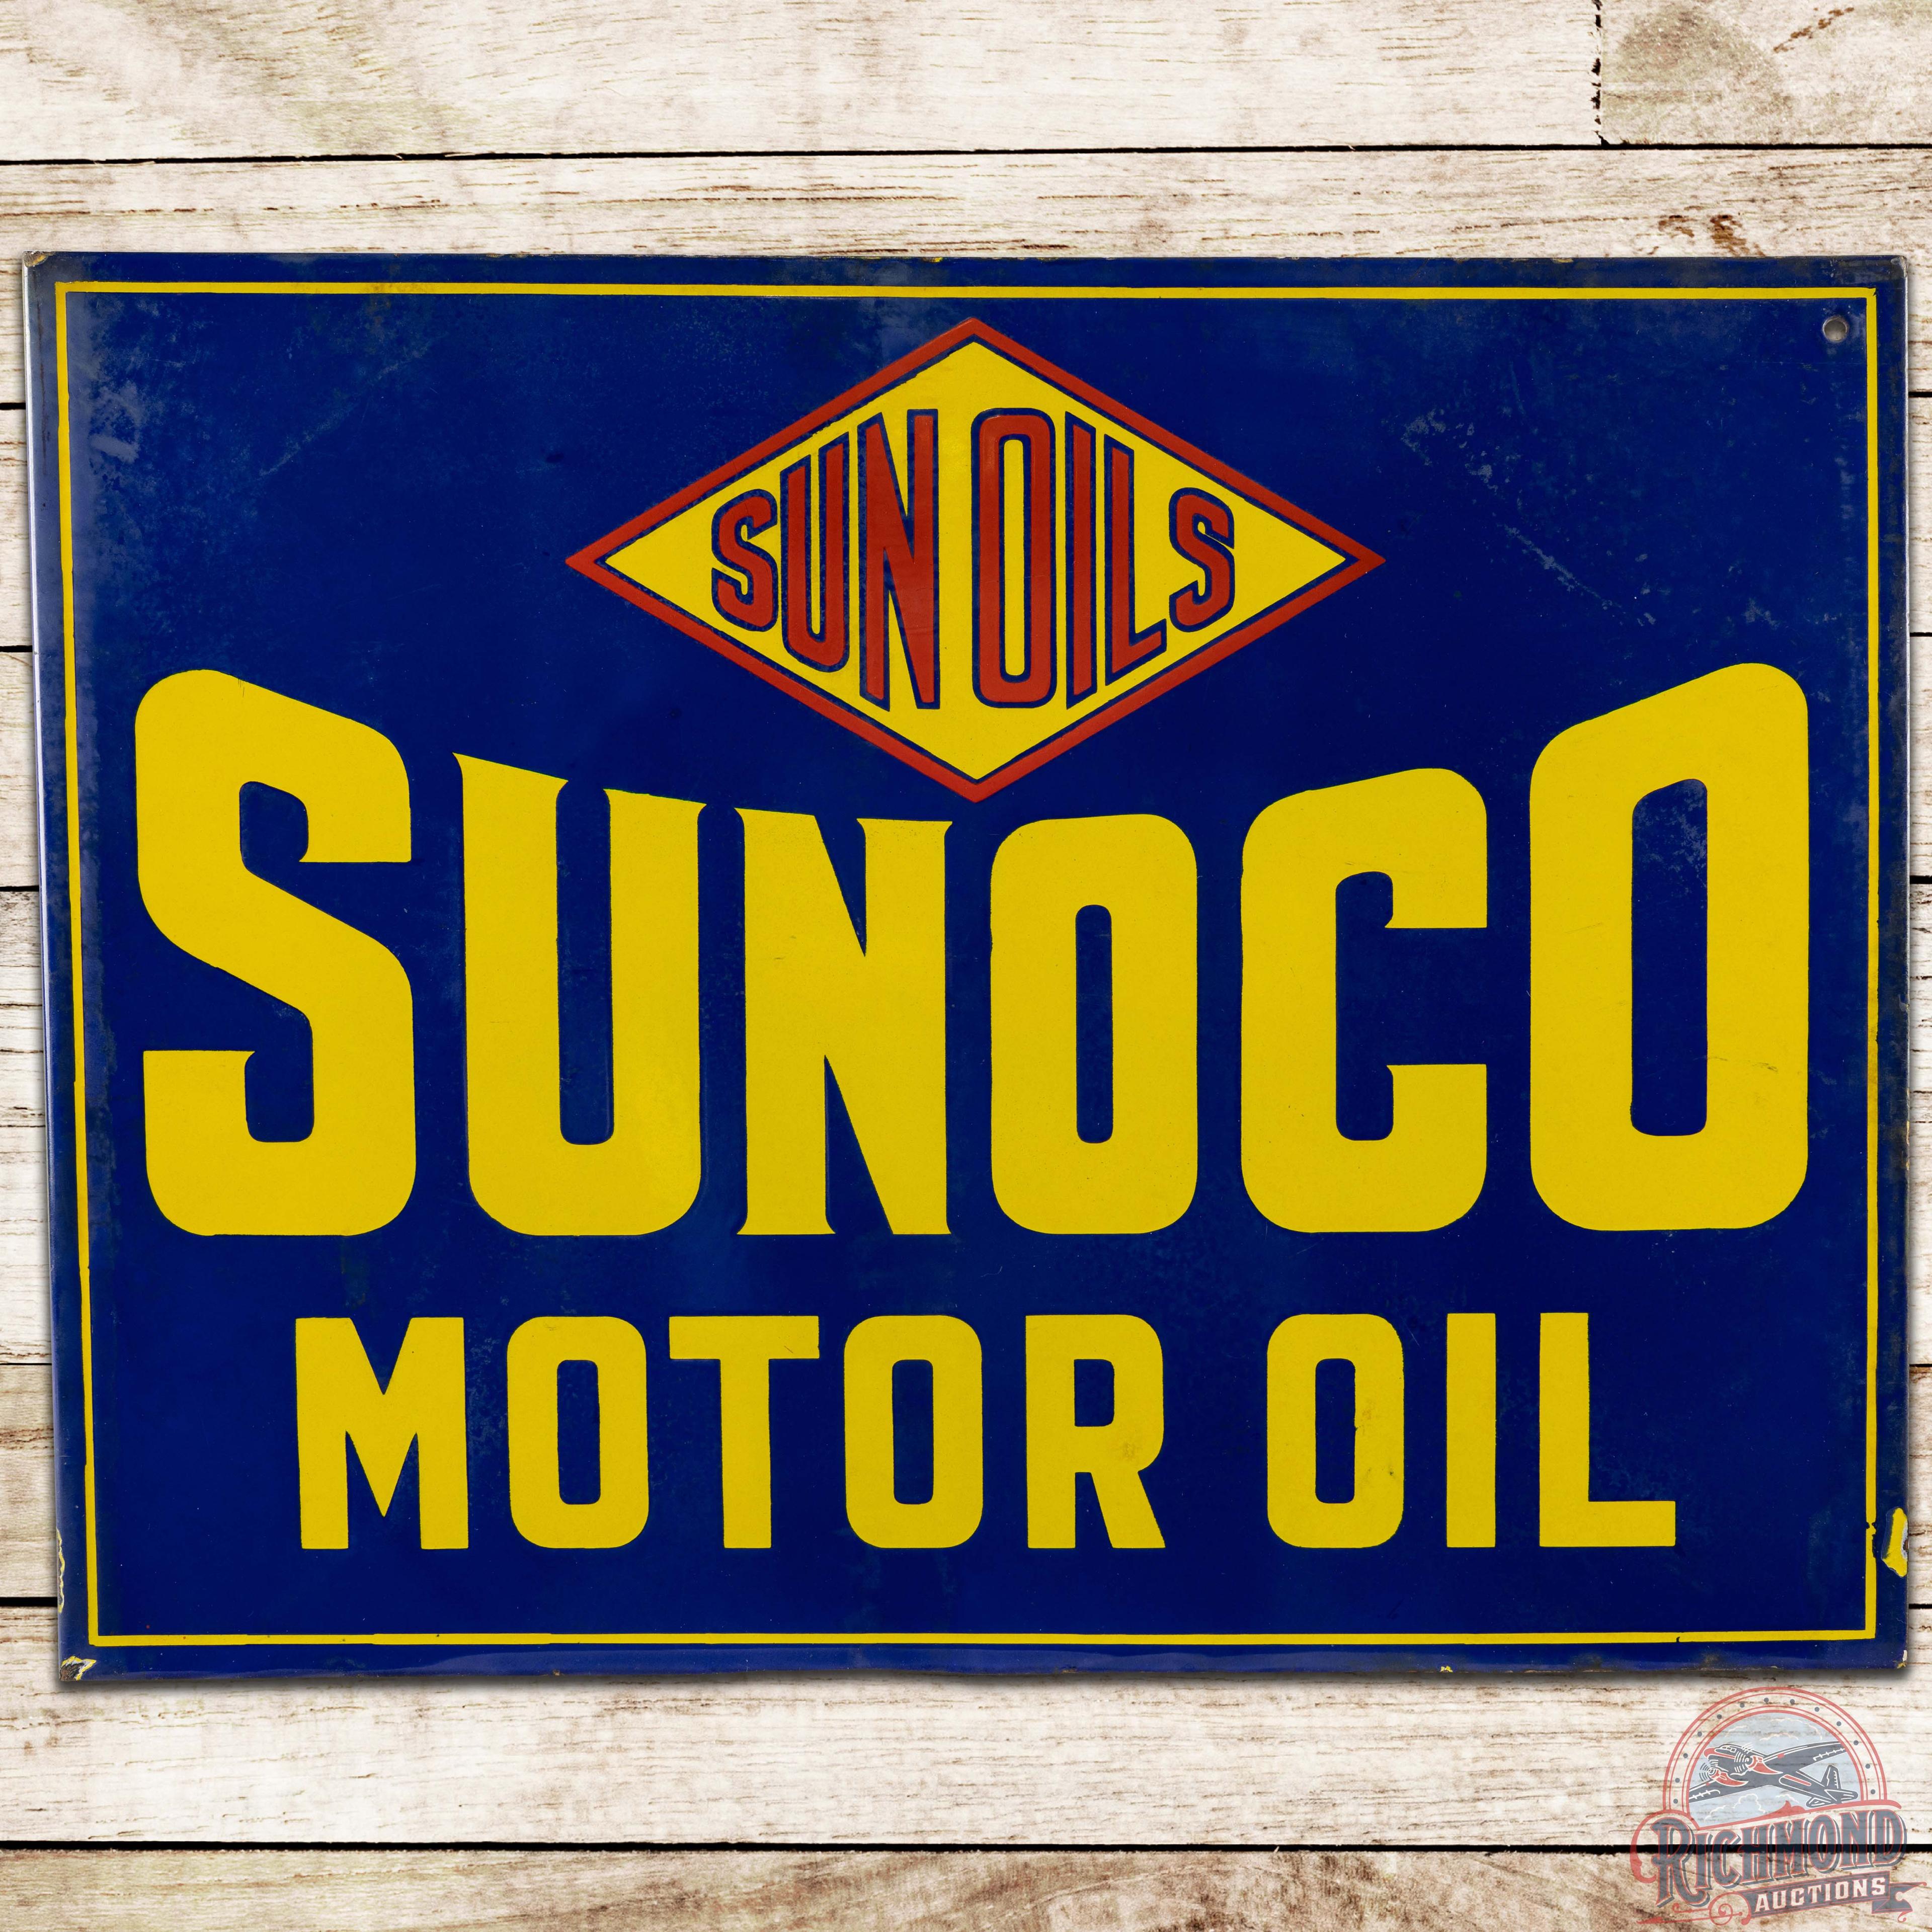 Sunoco Sun Oils Motor Oil DS Porcelain Flange Sign w/ Logo